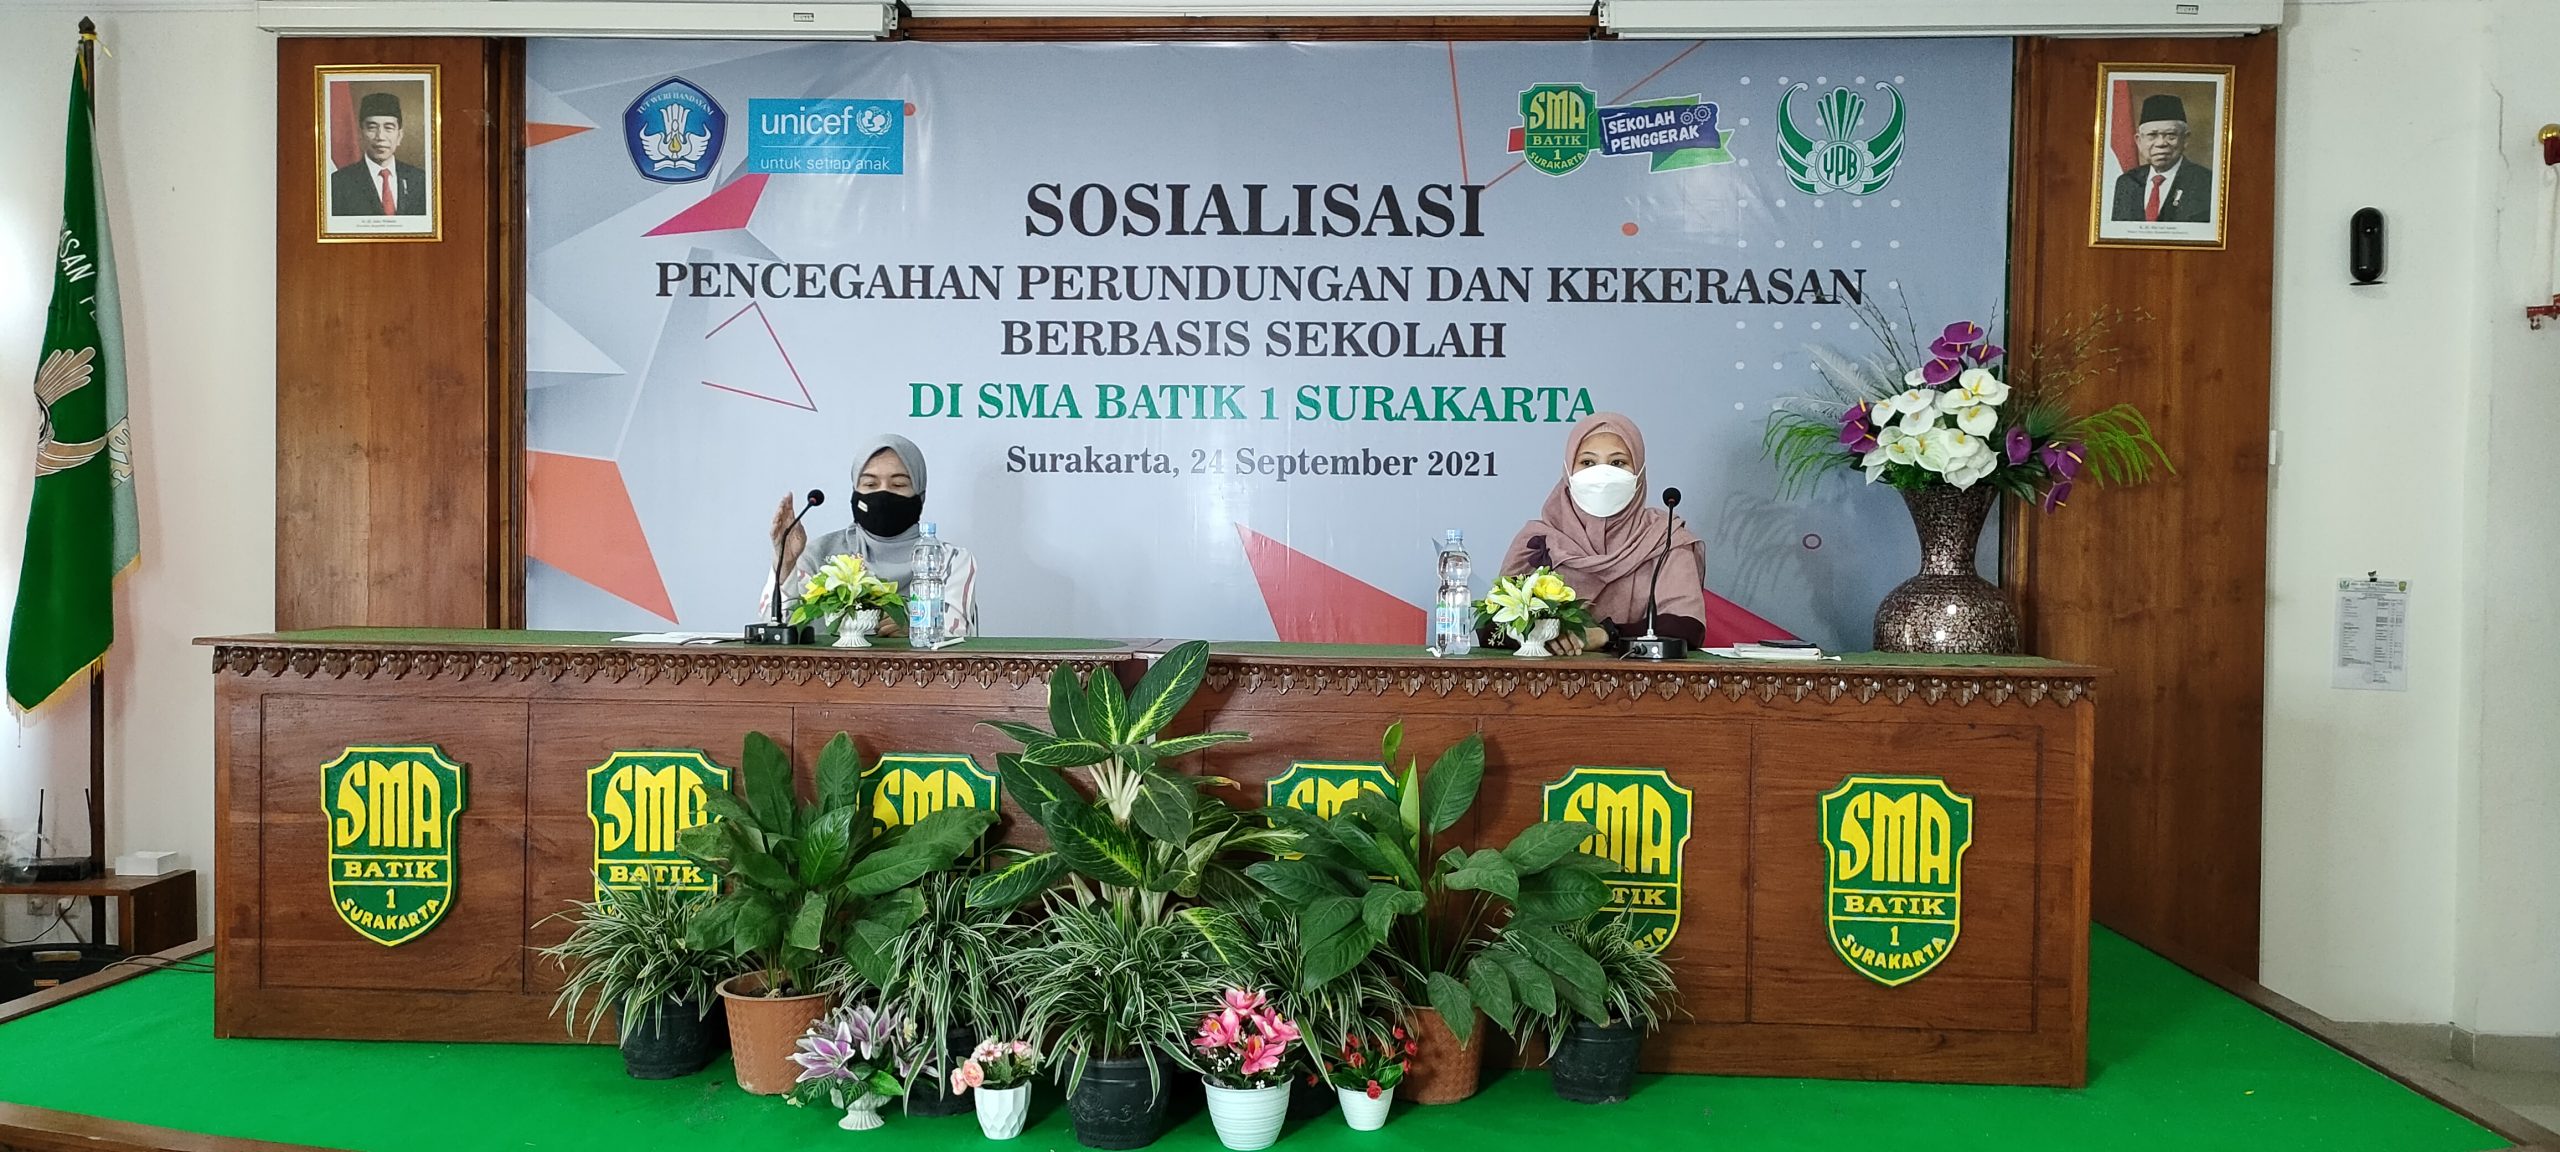 Sosialisasi Pencegahan Perundungan dan Kekerasan Berbasis Sekolah di SMA Batik 1 Surakarta